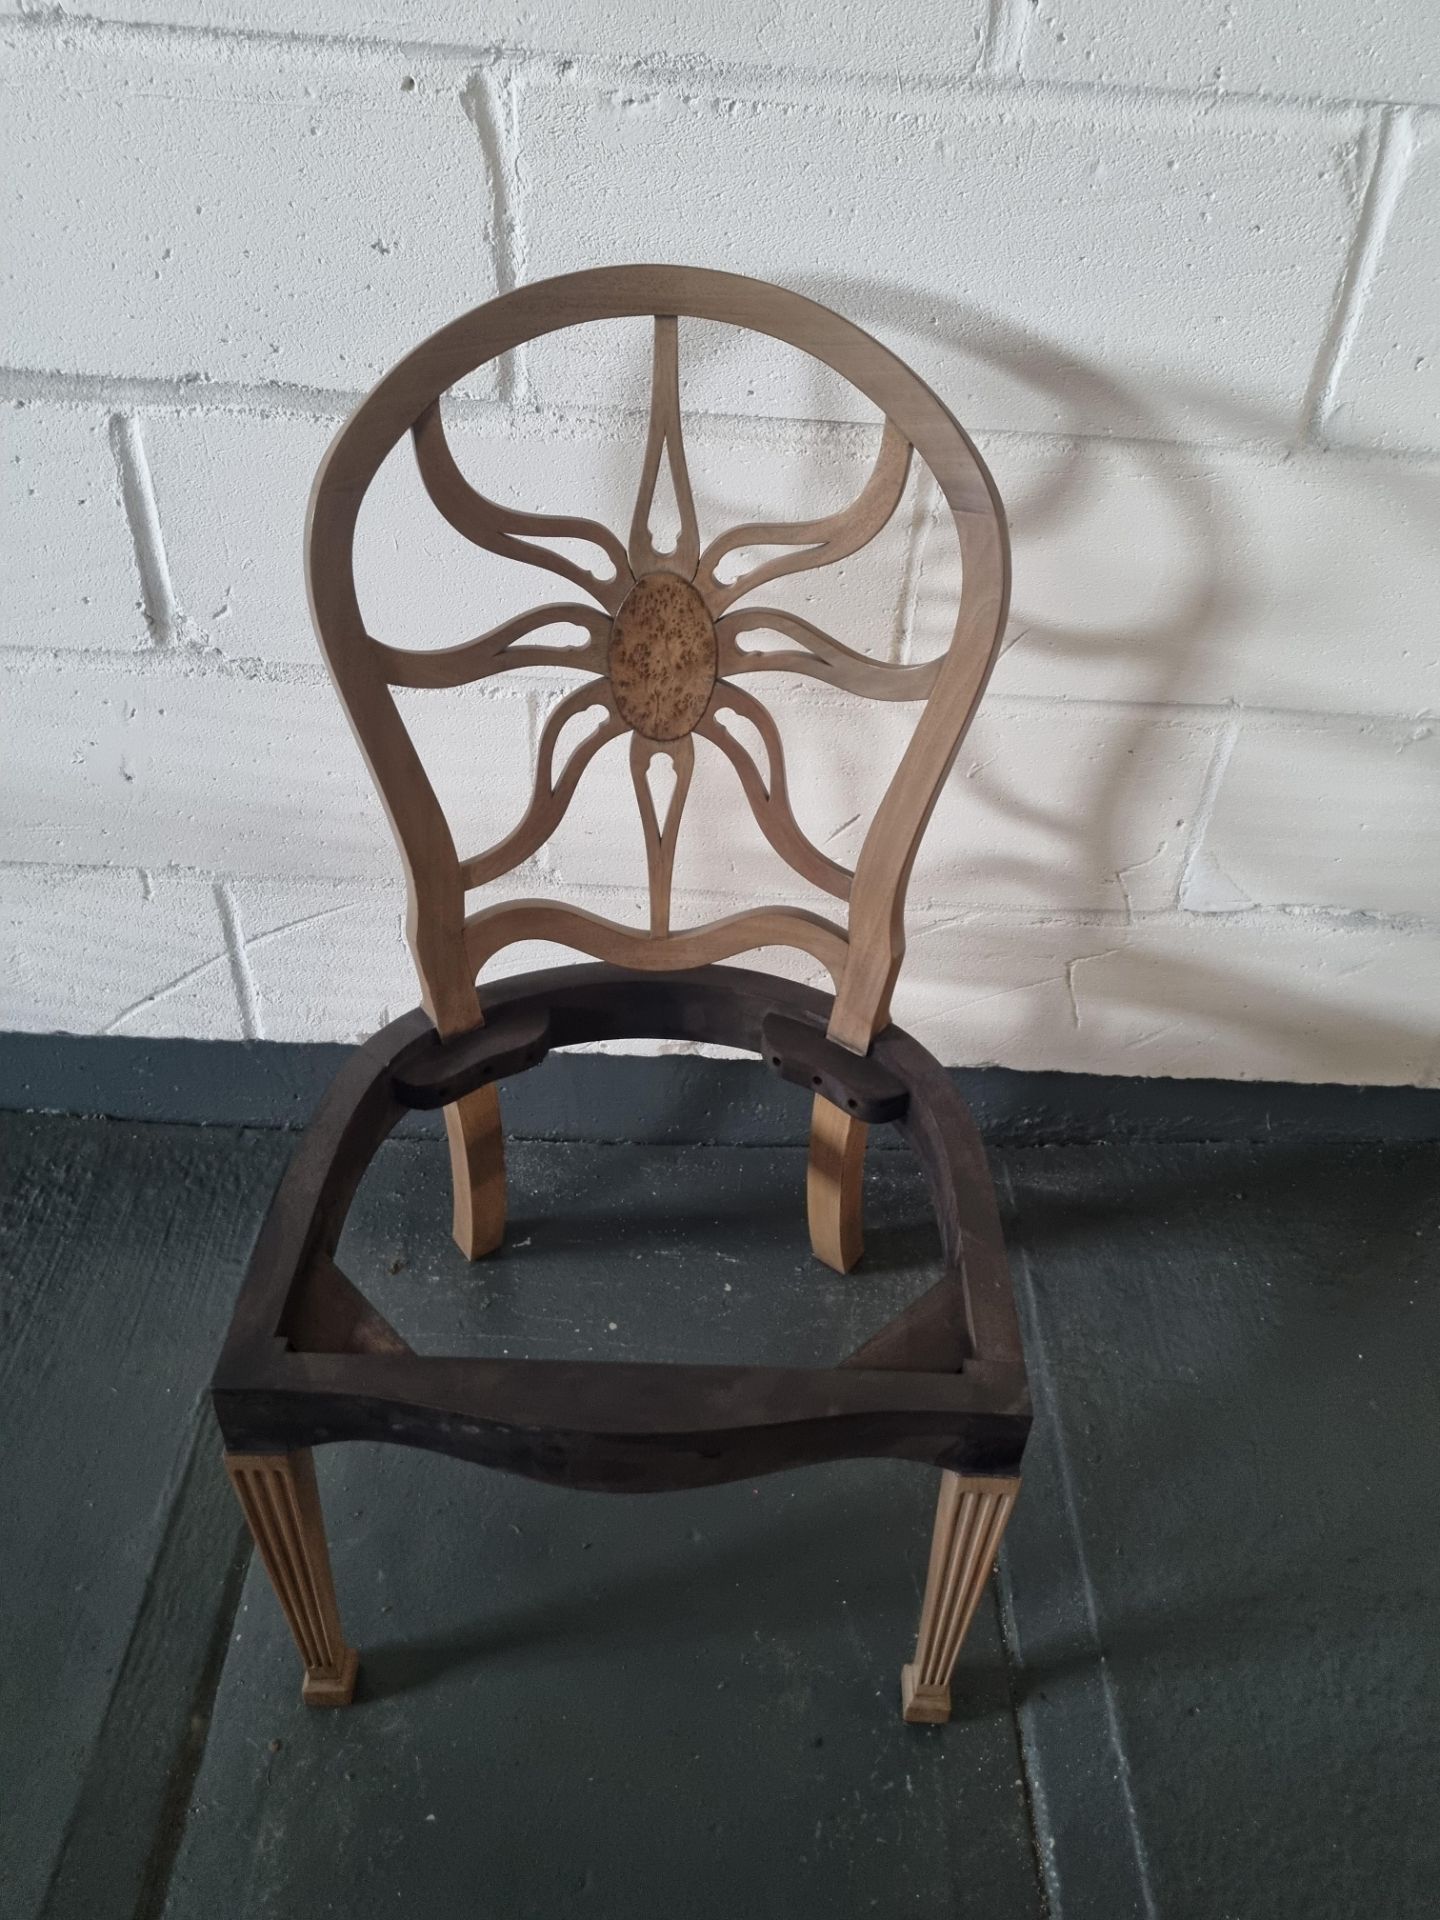 Arthur Brett Unupholstered Sunburst Side Chair George III Style The Unusual Design For These